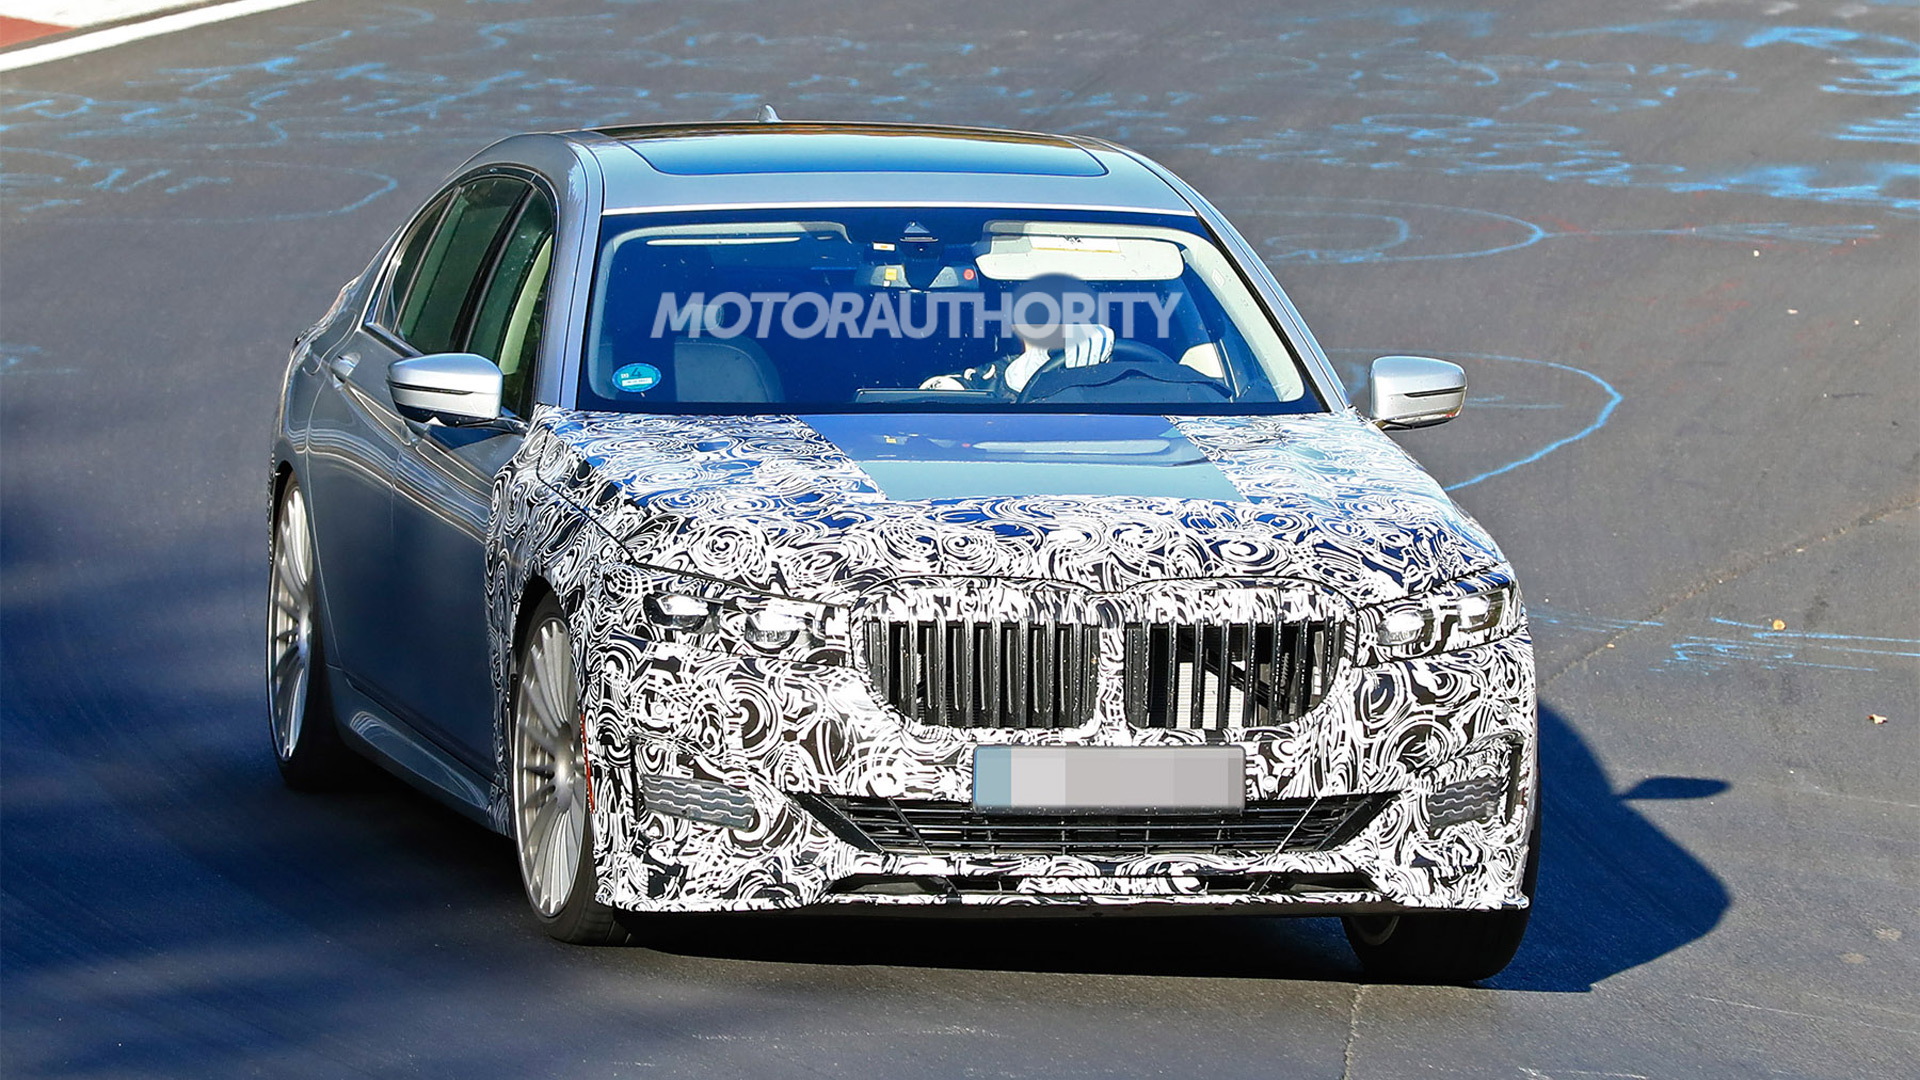 2020 BMW Alpina B7 facelift spy shots - Image via S. Baldauf/SB-Medien